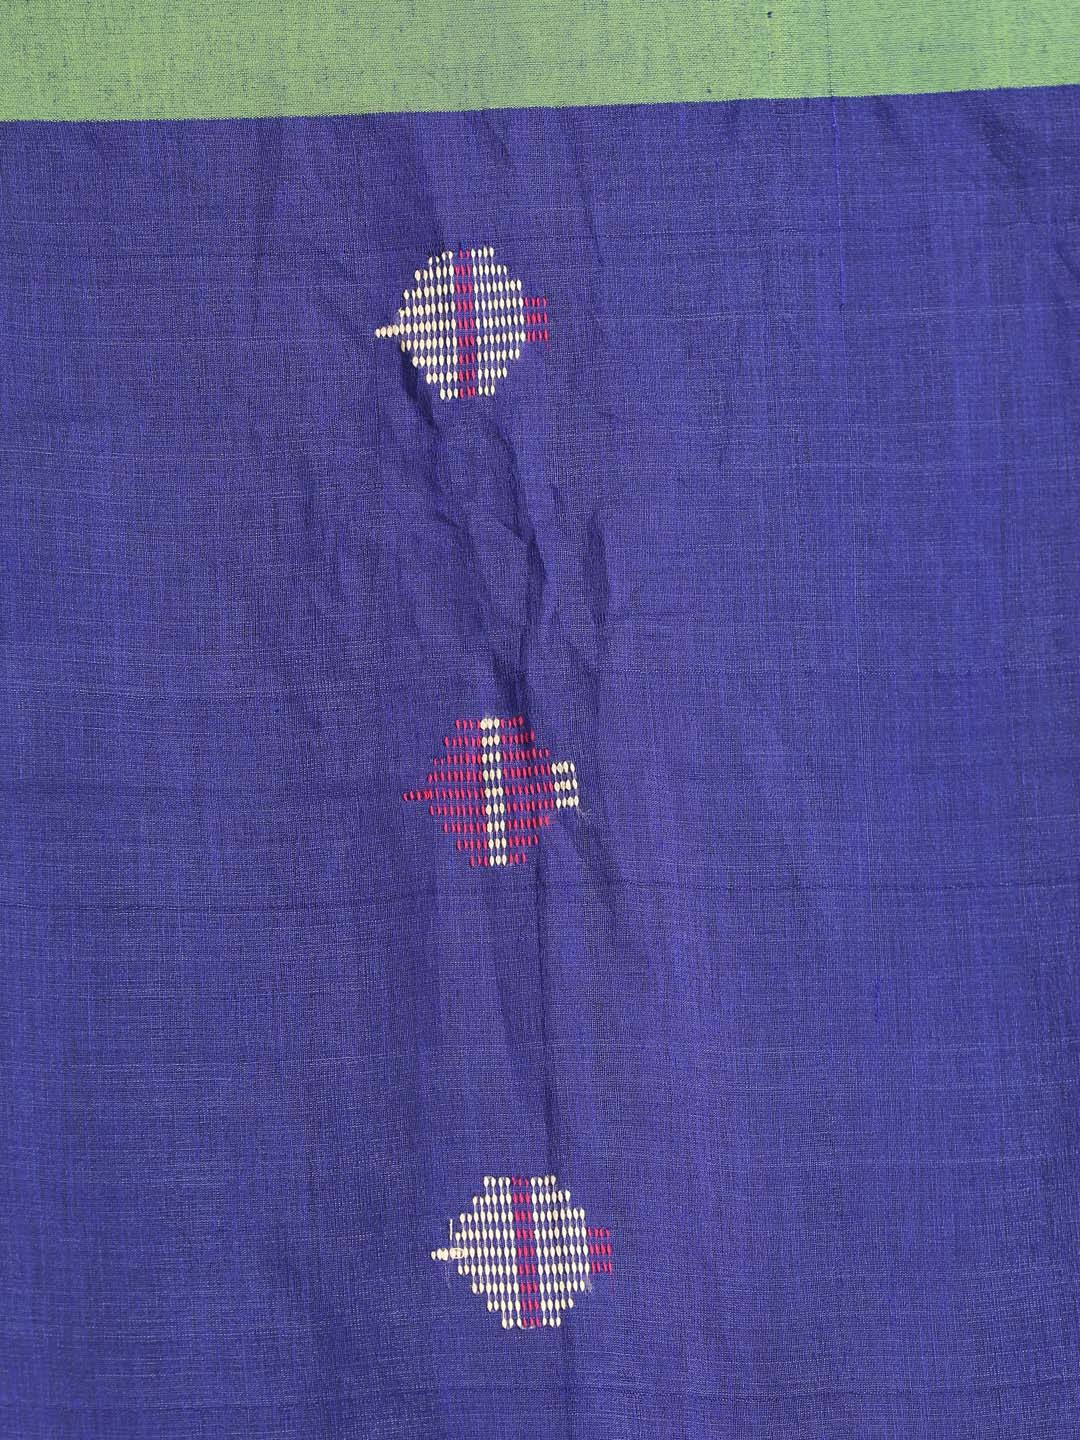 Indethnic Blue Bengal Handloom Cotton Blend Work Saree - Saree Detail View